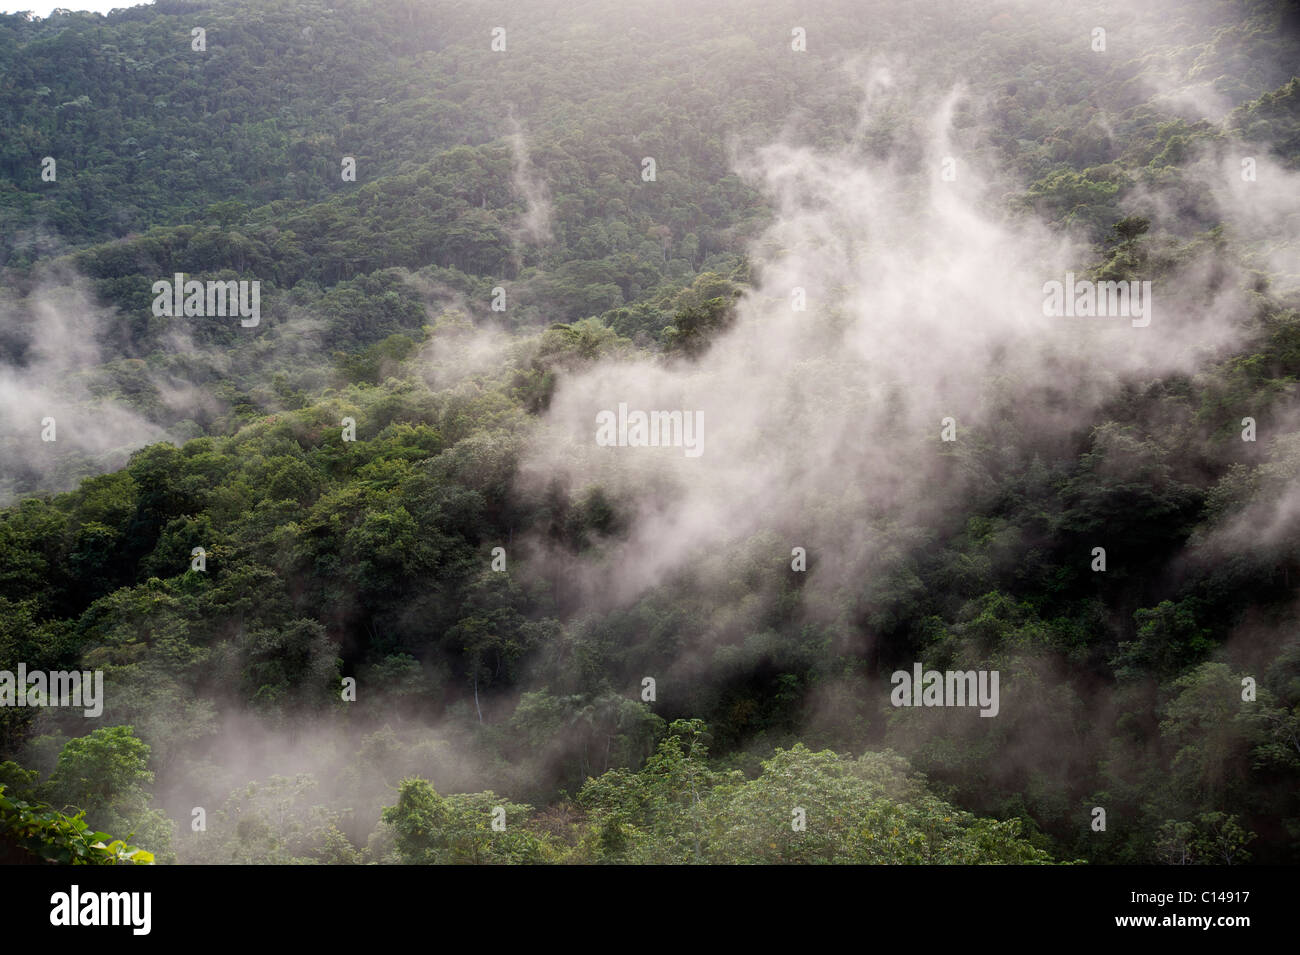 Amazon, Rainforest covered in mist, Brazil Stock Photo